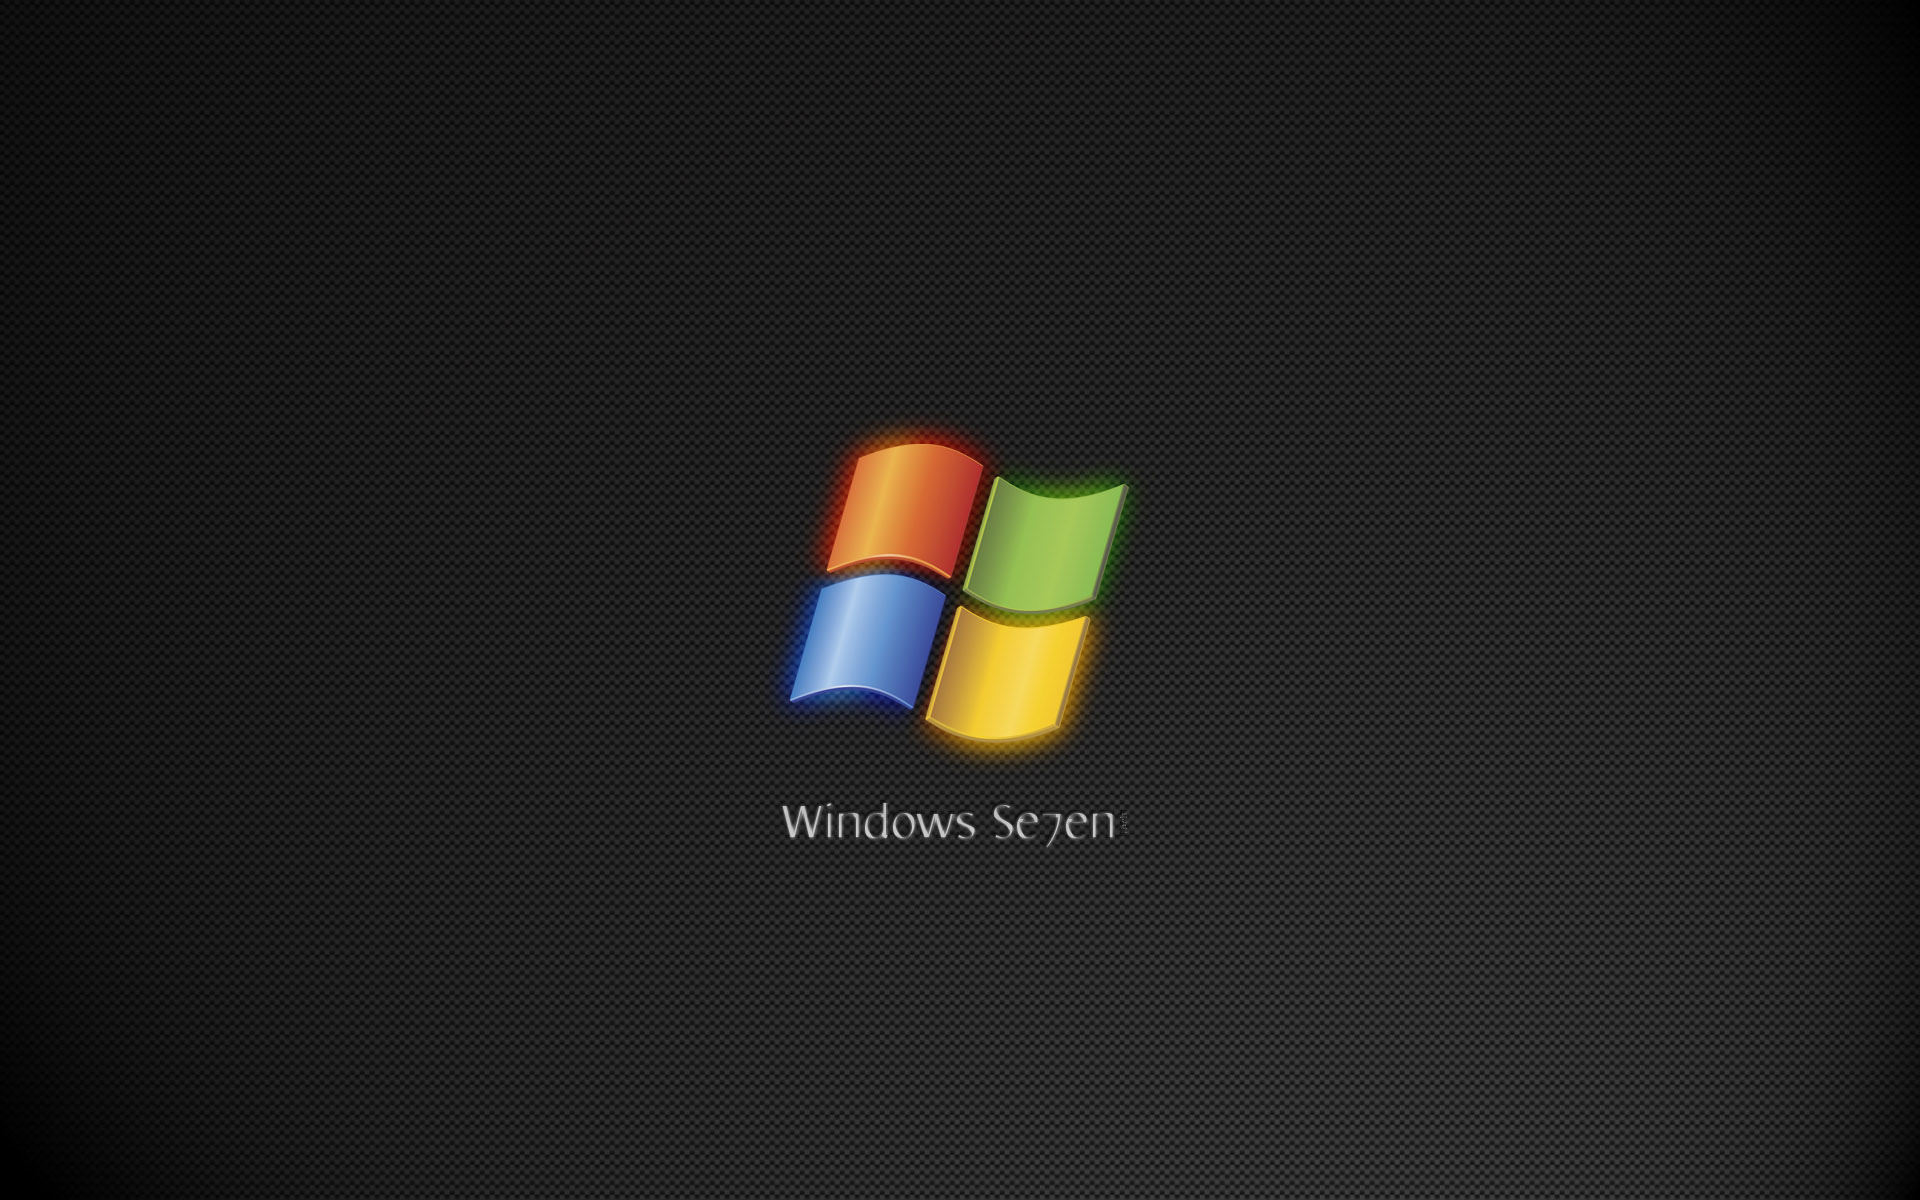 Microsoft Windows Se7en Grey Wallpaper And Image